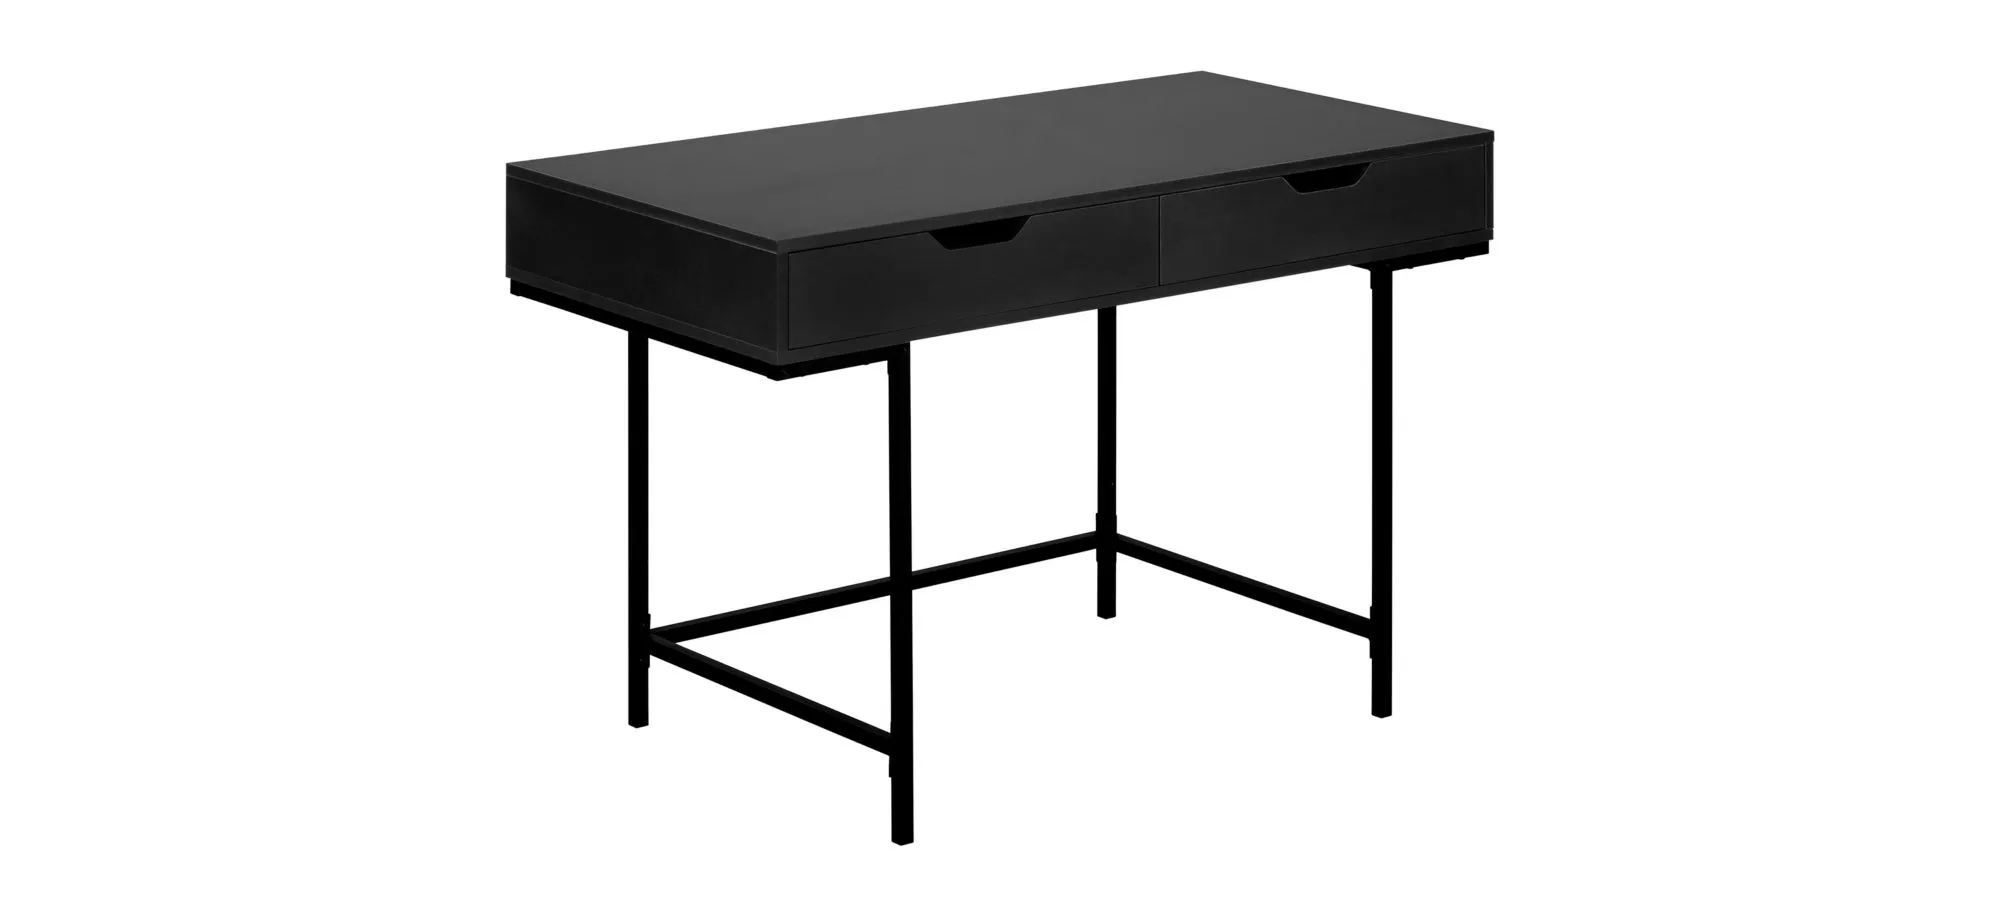 Forrest Computer Desk in Black by Monarch Specialties